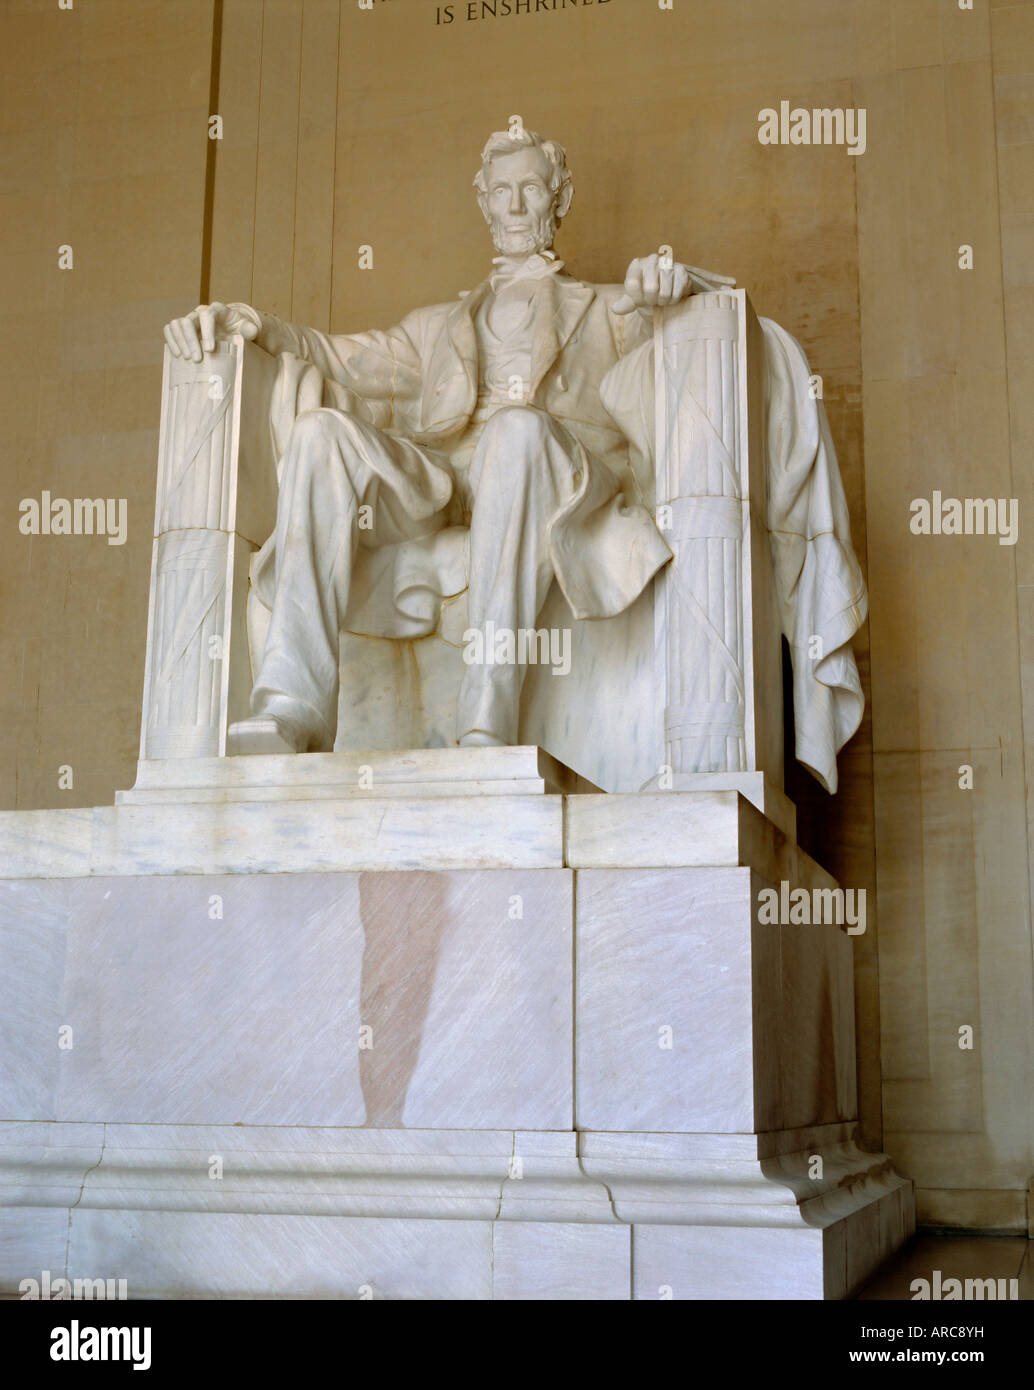 Statue of Abraham Lincoln, Lincoln Memorial, Washington DC, USA Stock Photo